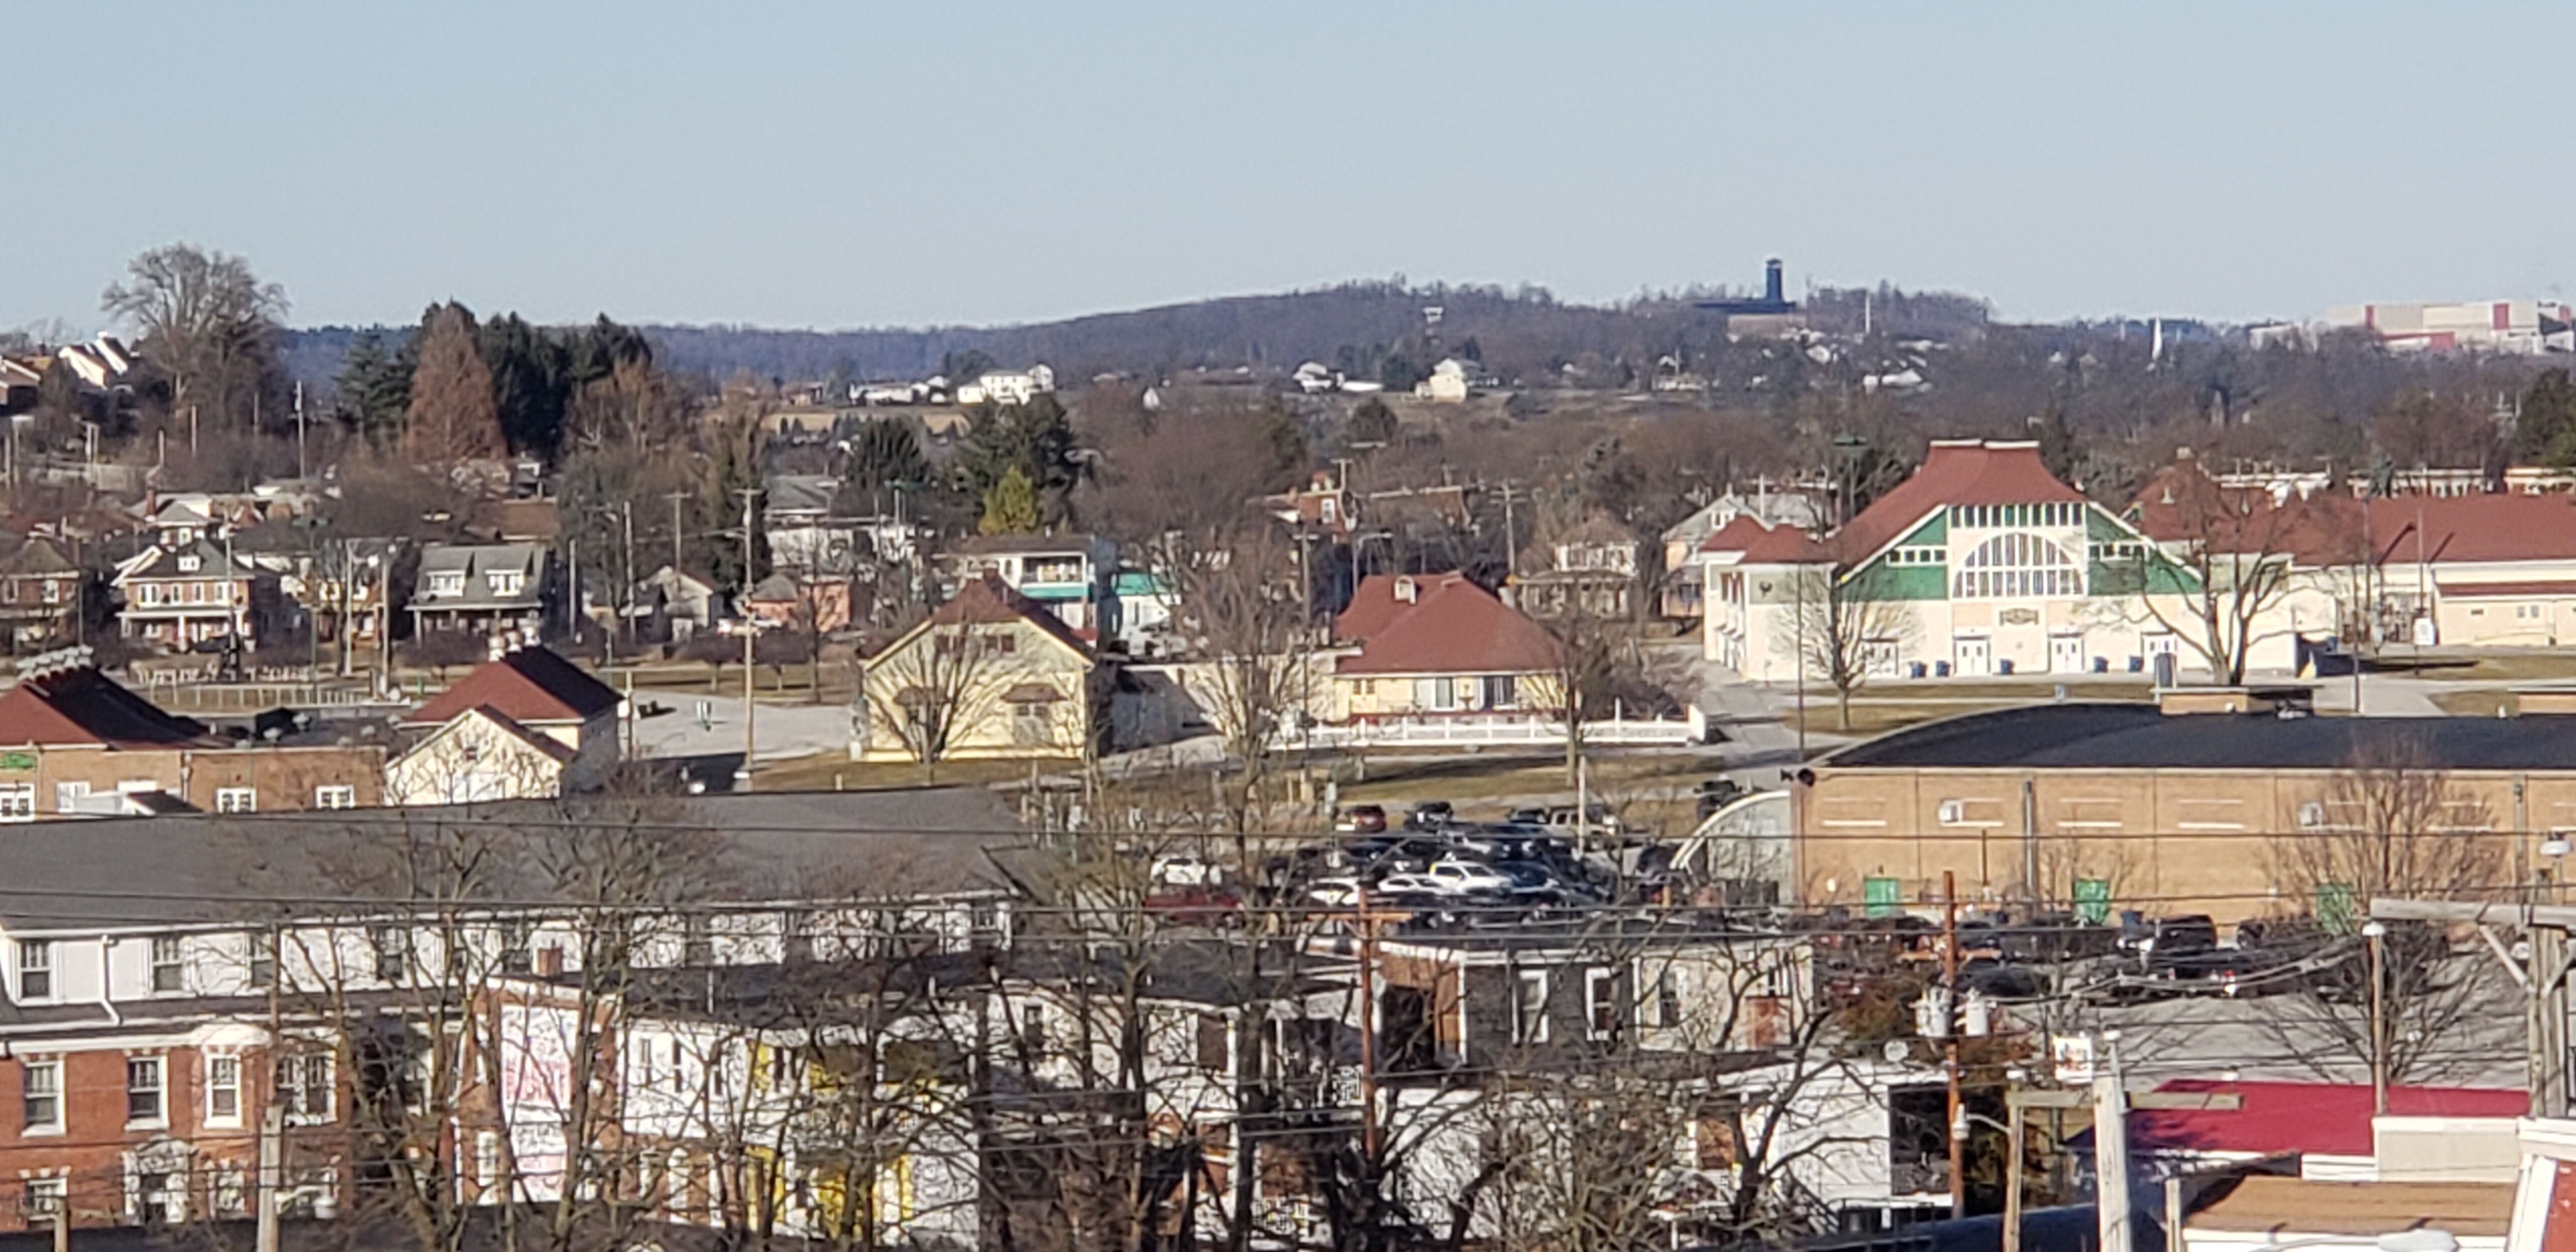 About West York Borough — The Borough of West York Pennsylvania